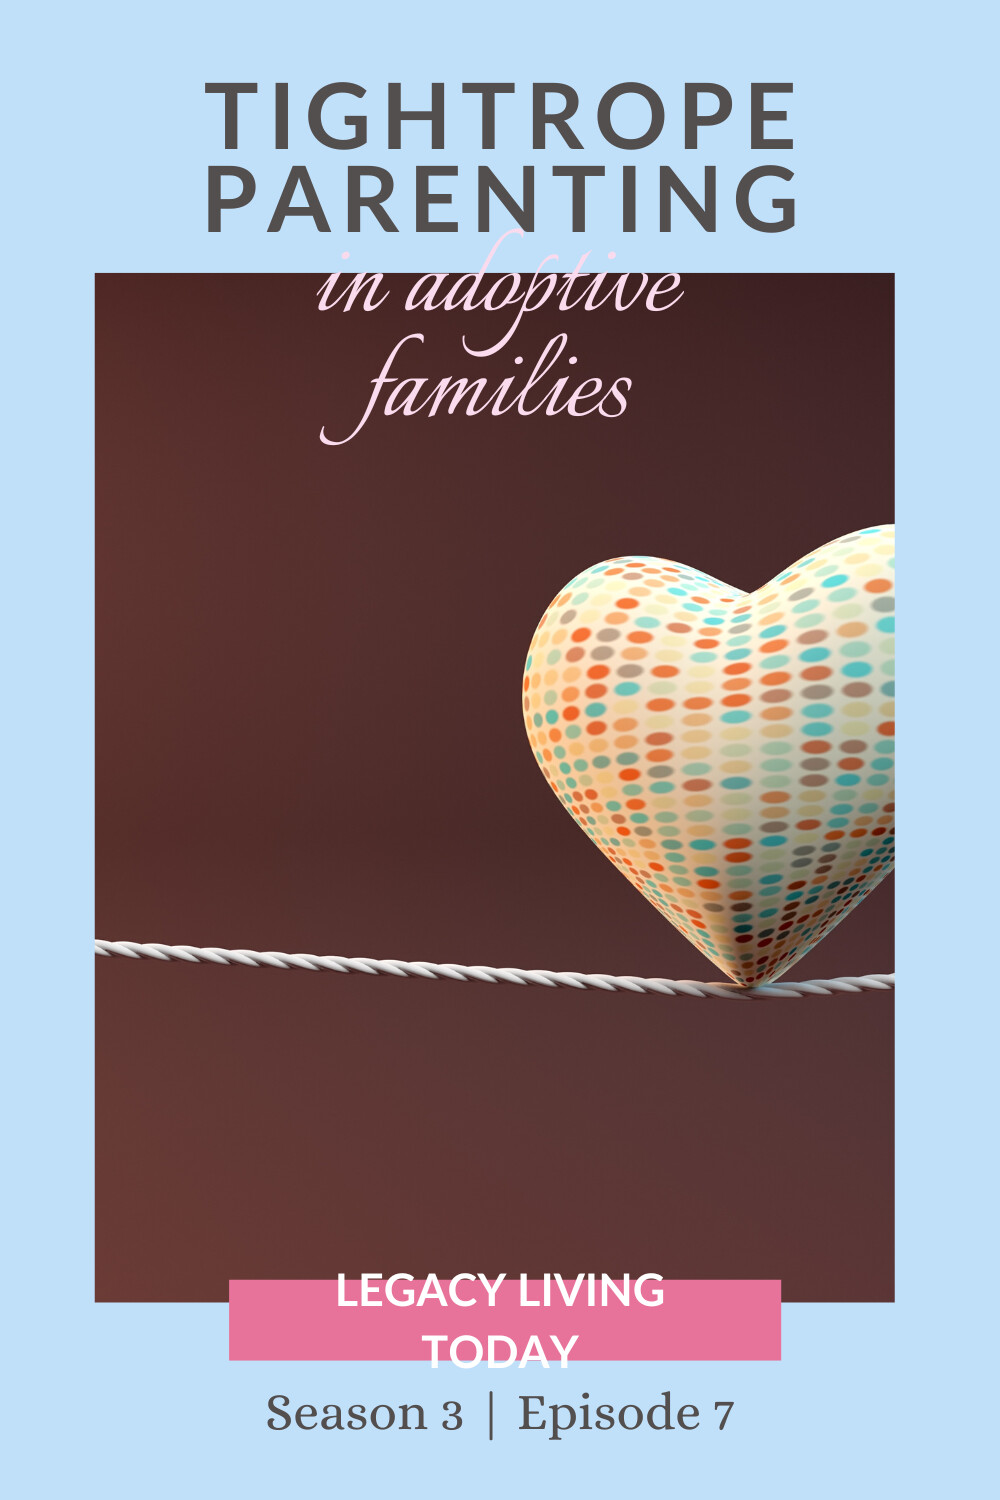 Adoptive Parents: The Tightrope Walk of Caregiving